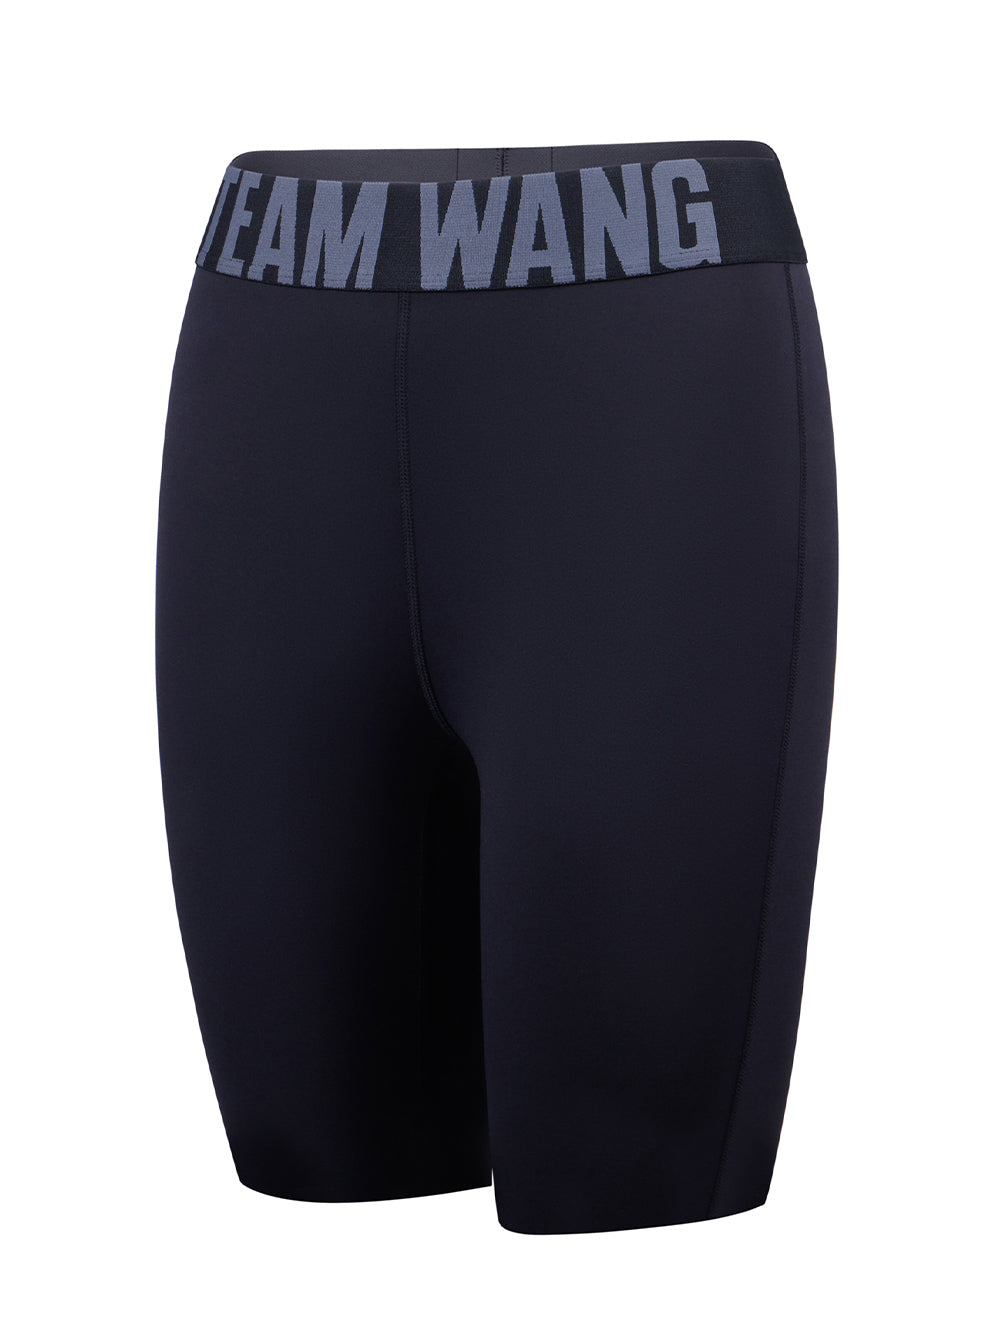 Team-Wang-Design-THE-ORIGINAL-1-Biker-Shorts-Black-3